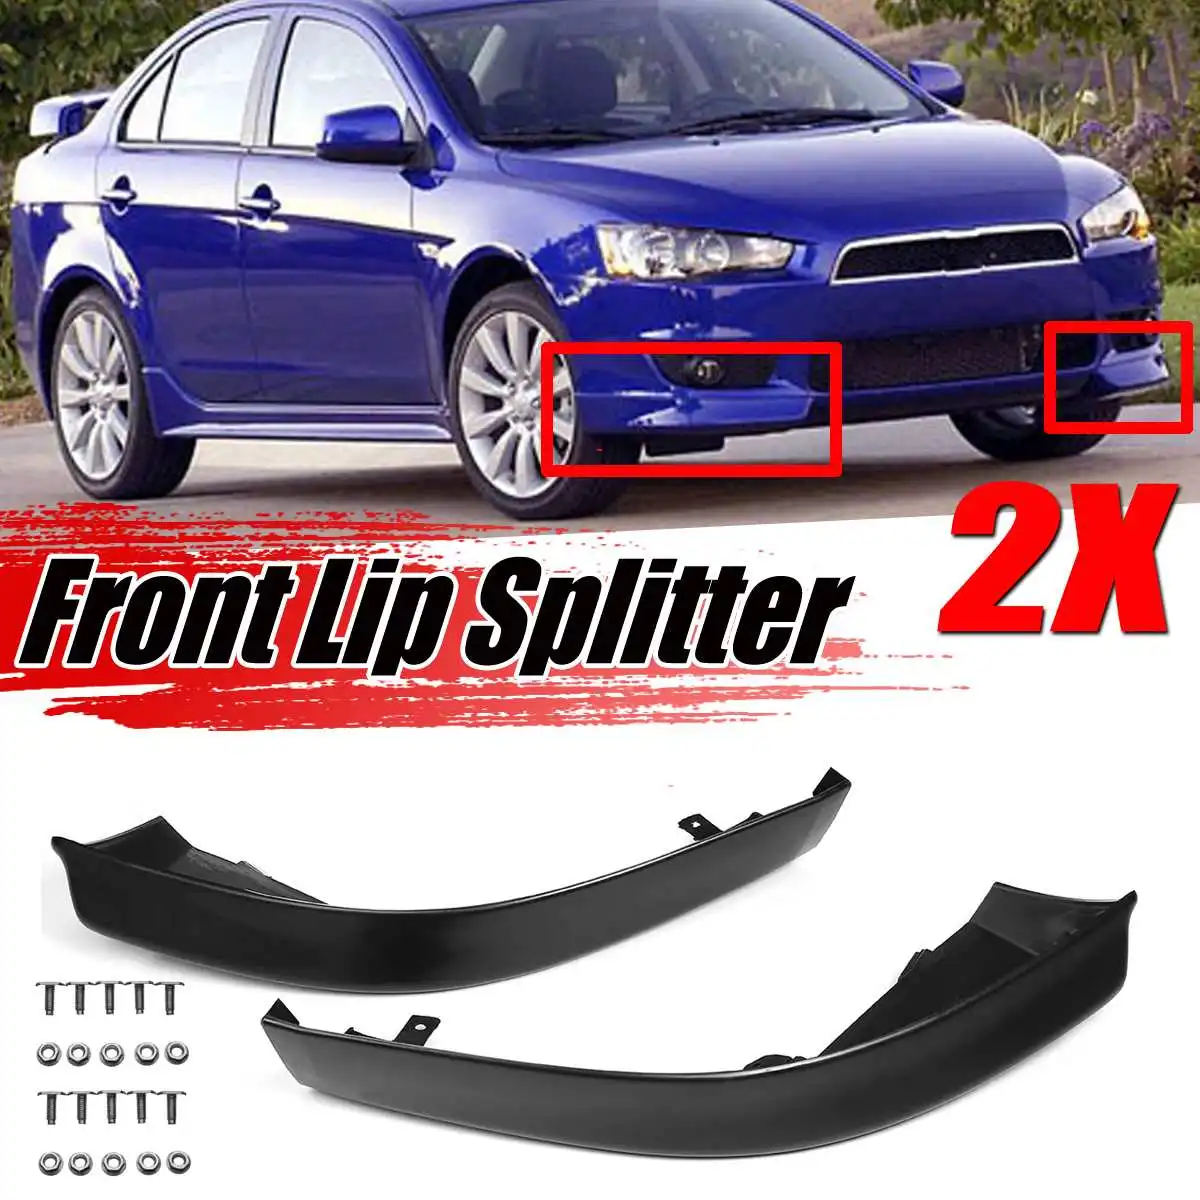 2pcs Unpainted Black Car Front Bumper Splitter Lip Spoiler Body Kit Diffuser Protector For Mitsubishi Lancer 2008-2015